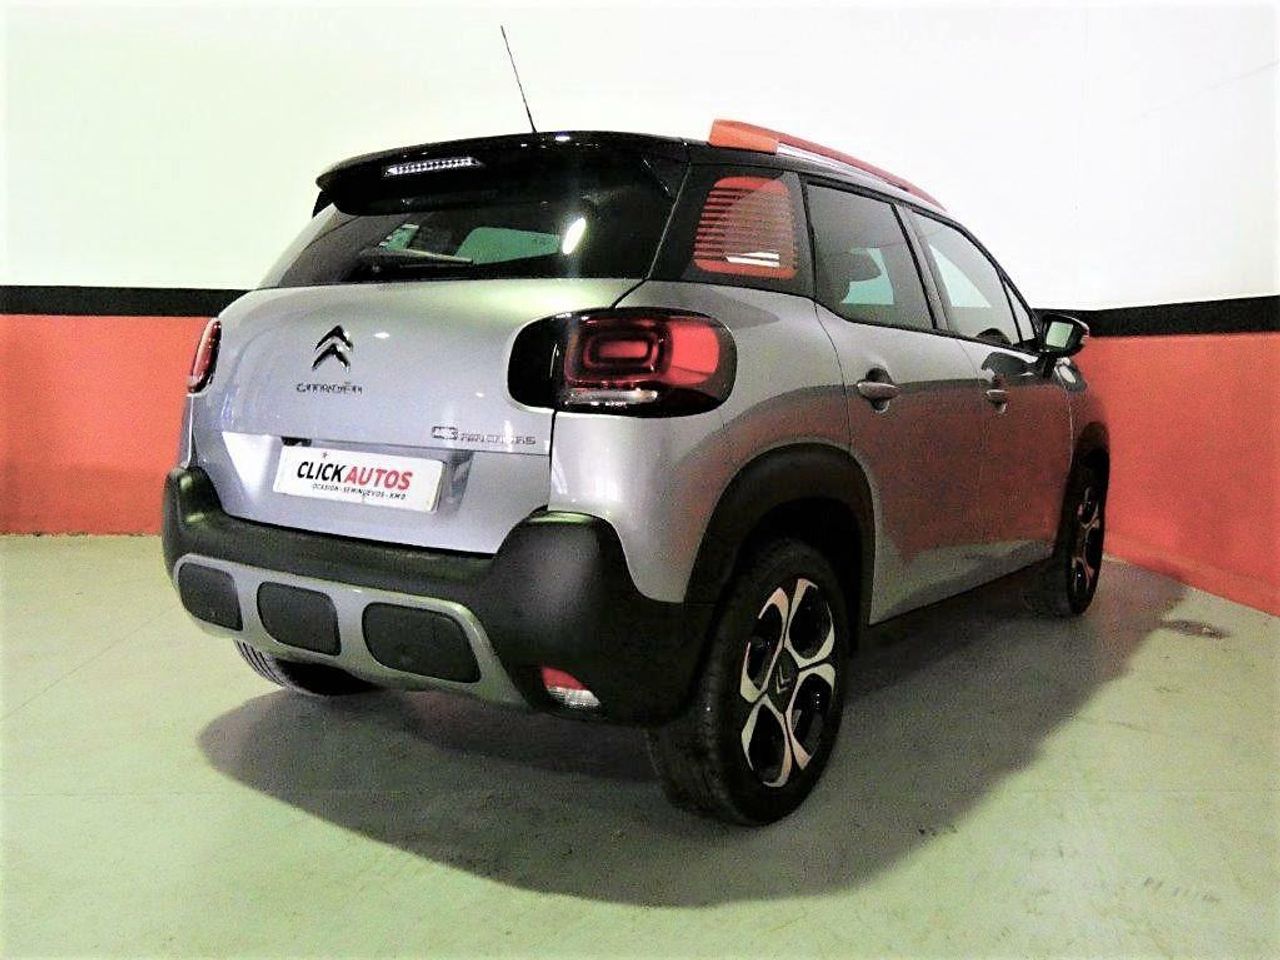 Foto Citroën C3 Aircross 4